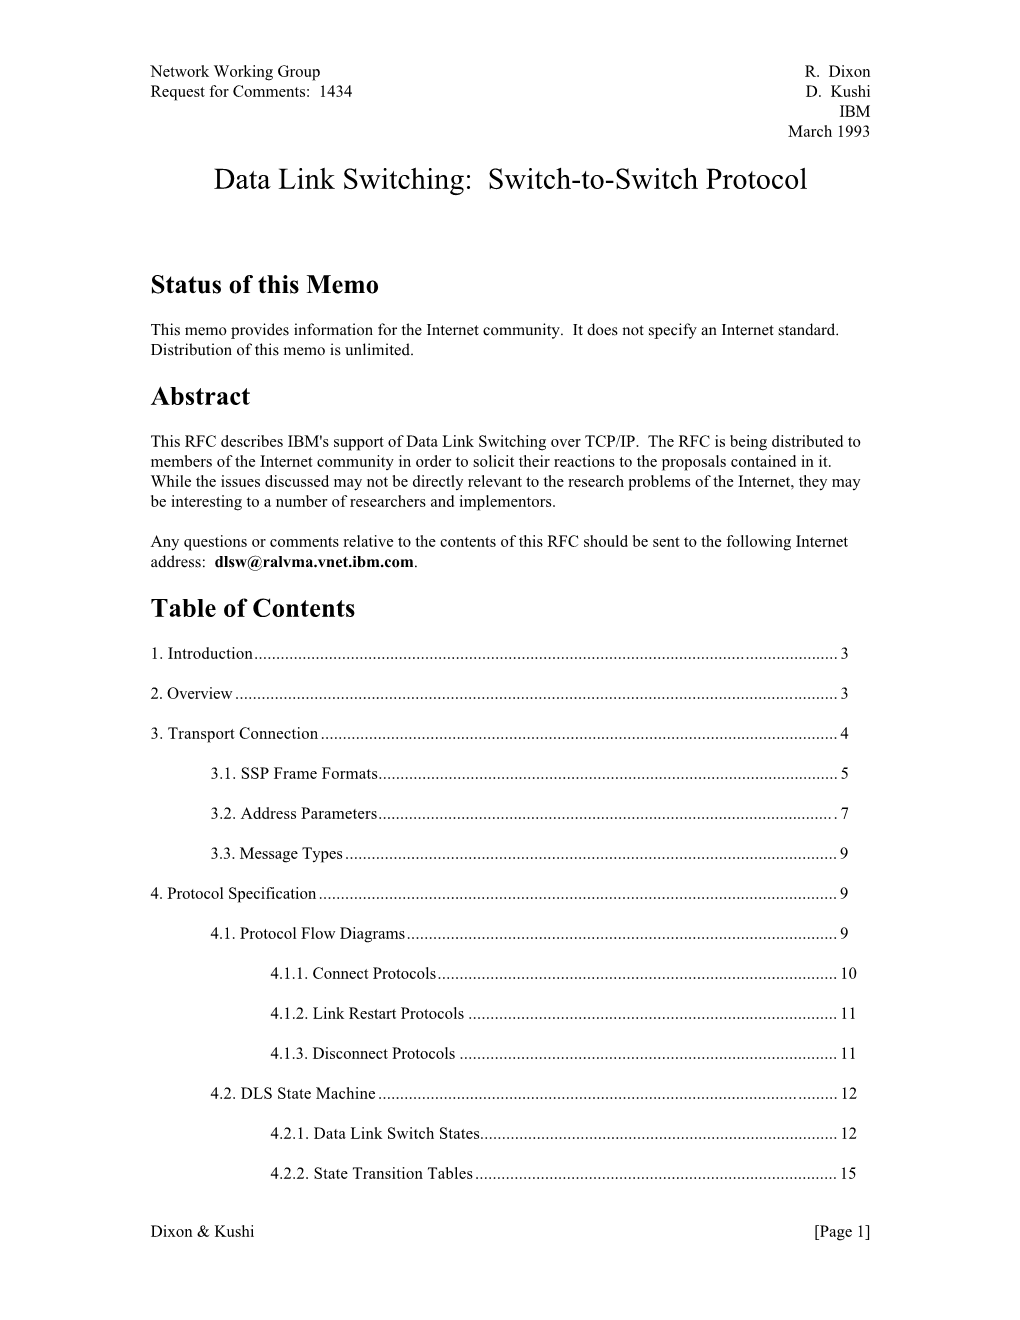 Data Link Switching: Switch-To-Switch Protocol